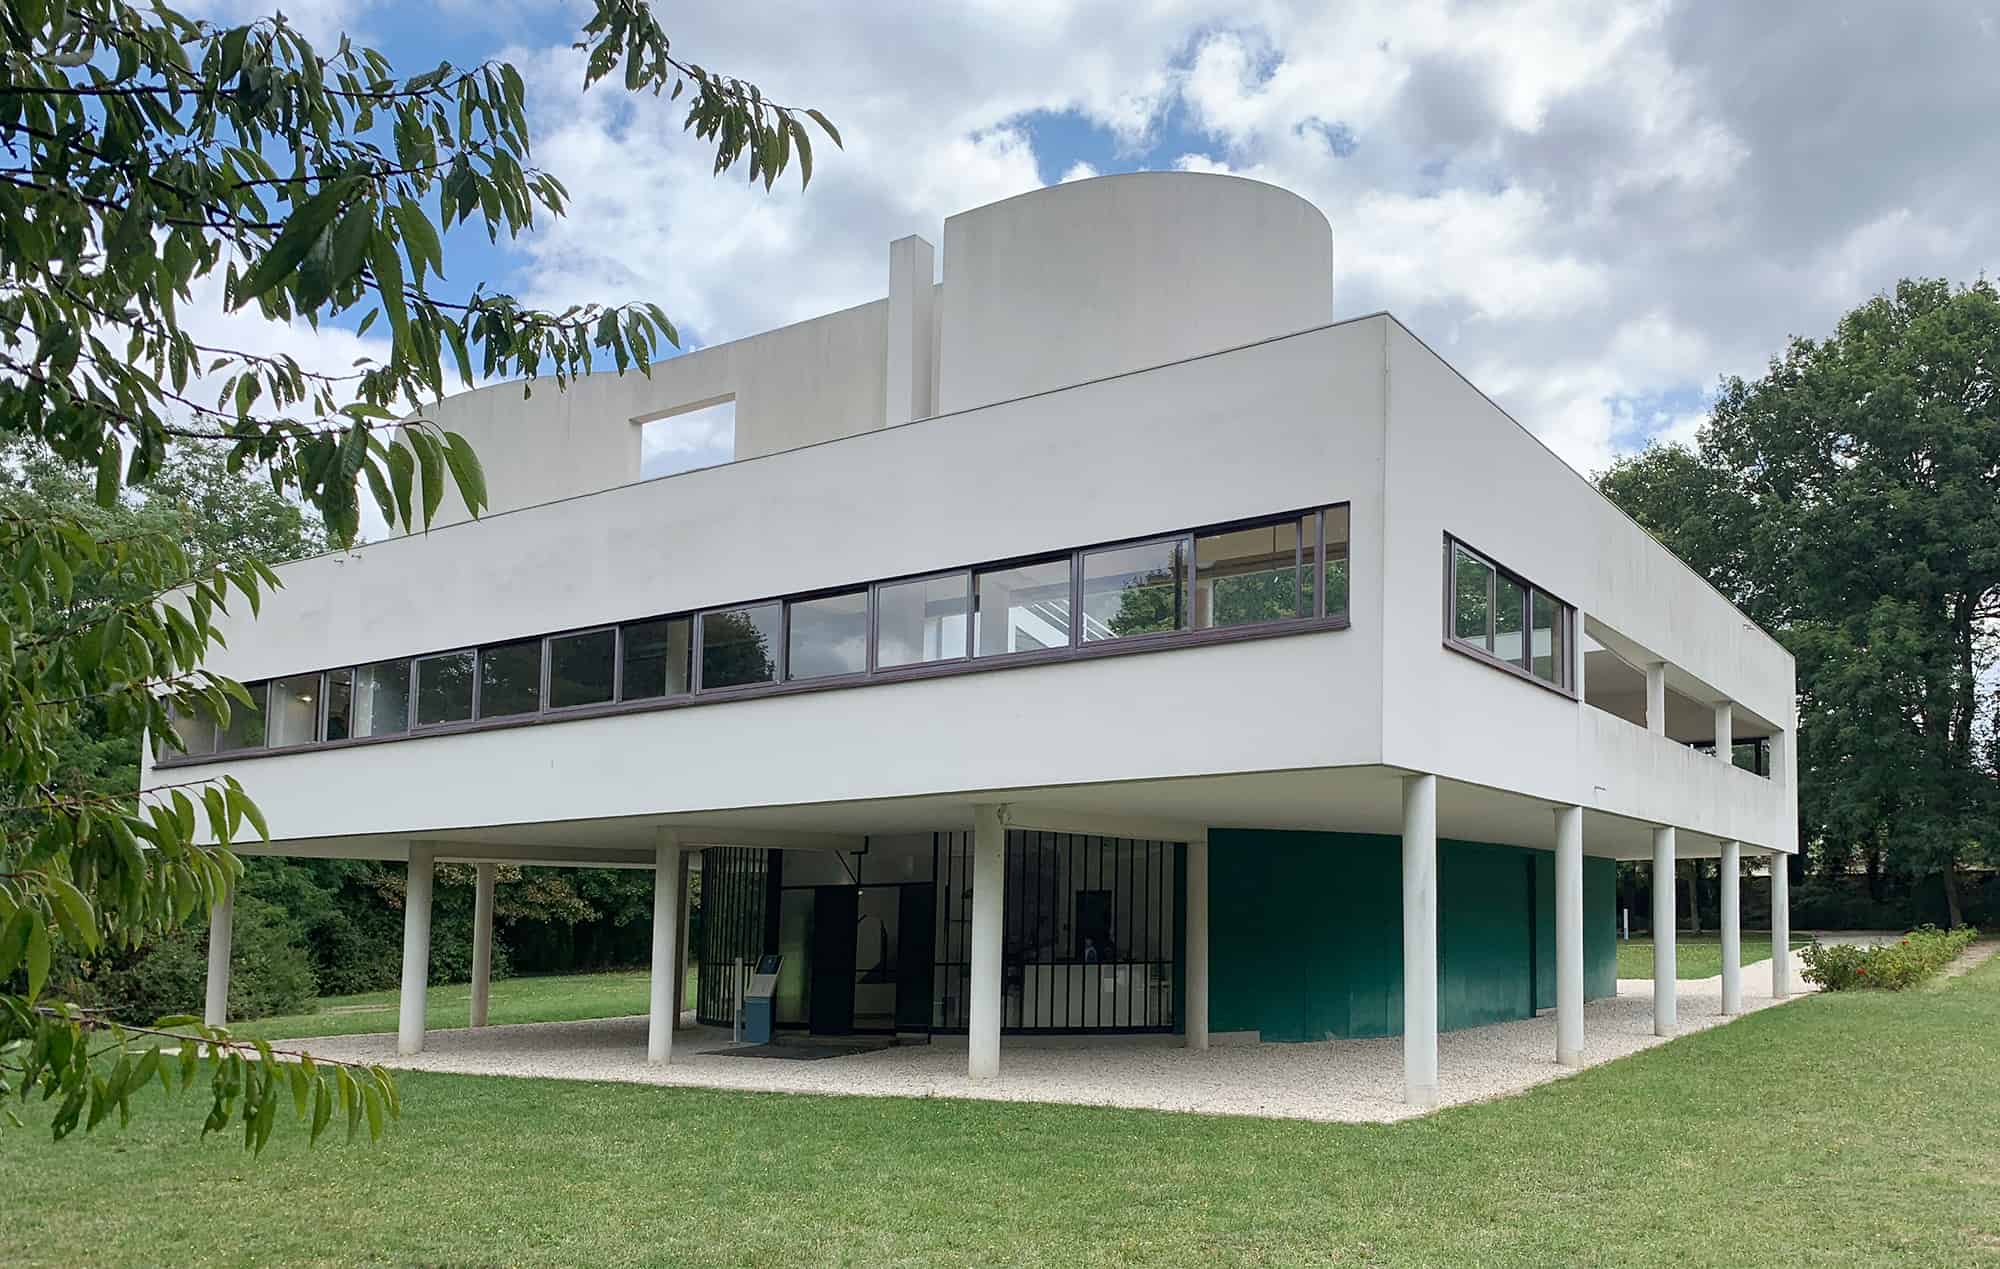 Corbusiers Villa Savoye Corbusier Architecture Le Corbusier | Images ...